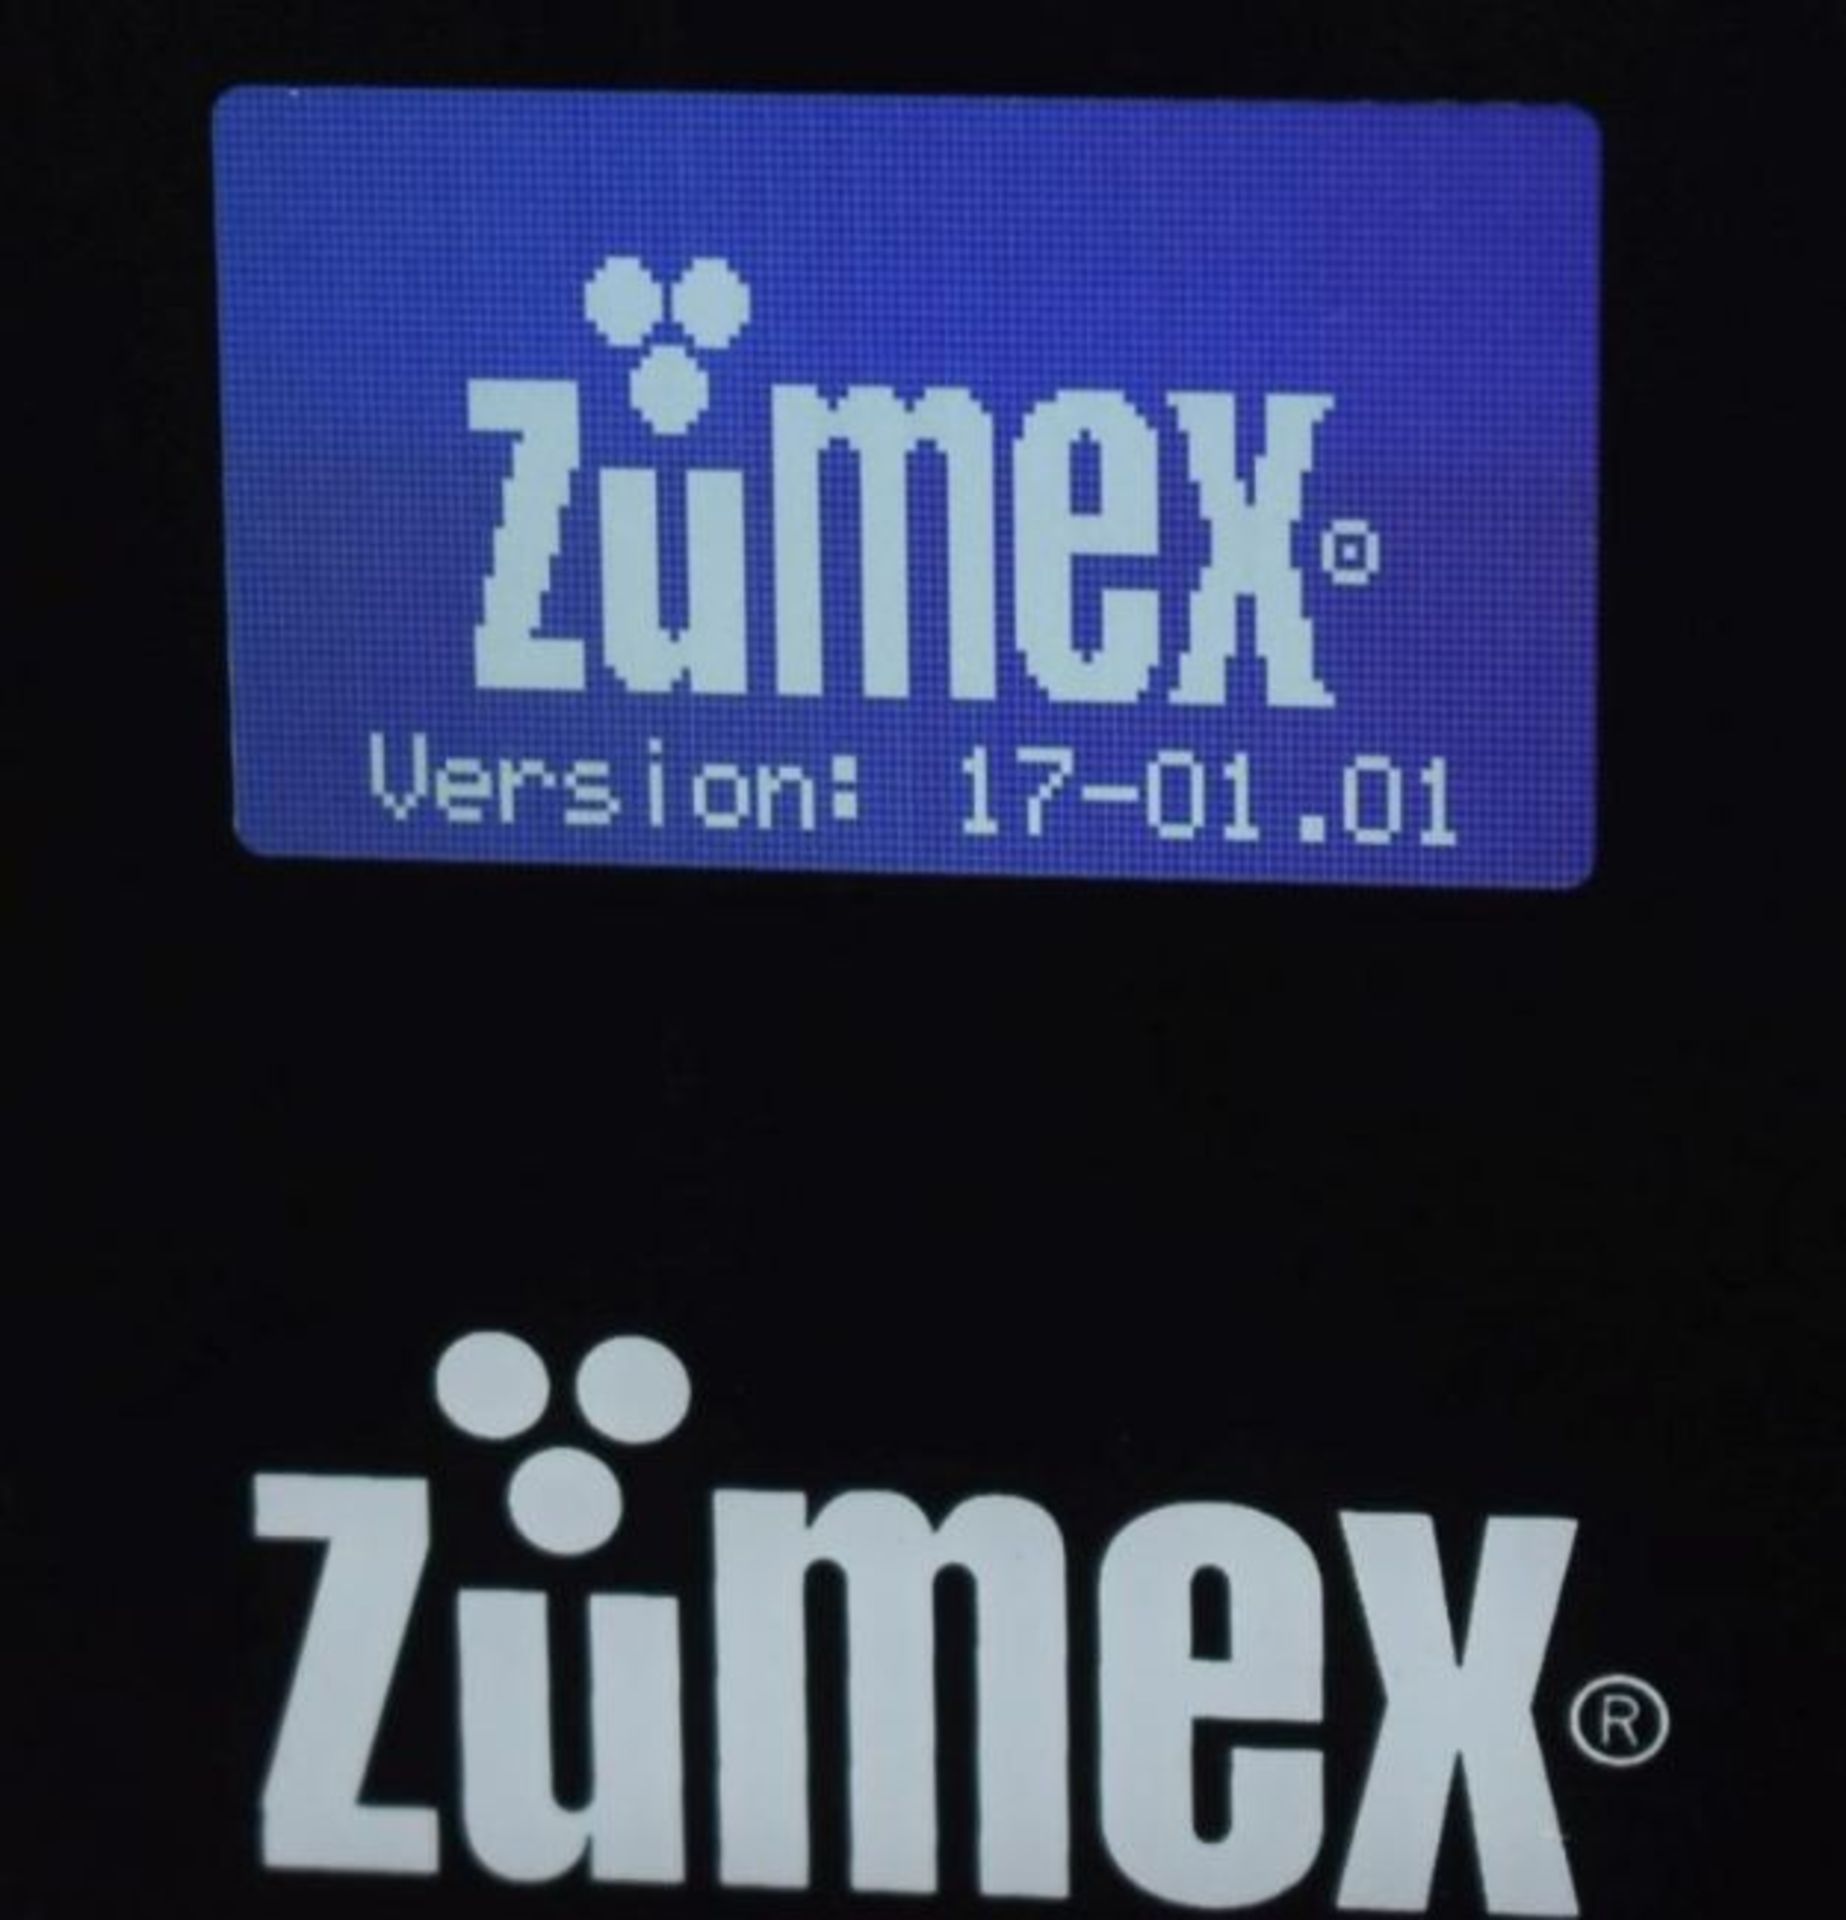 1 x Zumex Speed S +Plus Self-Service Podium Commercial Citrus Juicer - Manufactured in 2018 - - Image 13 of 20